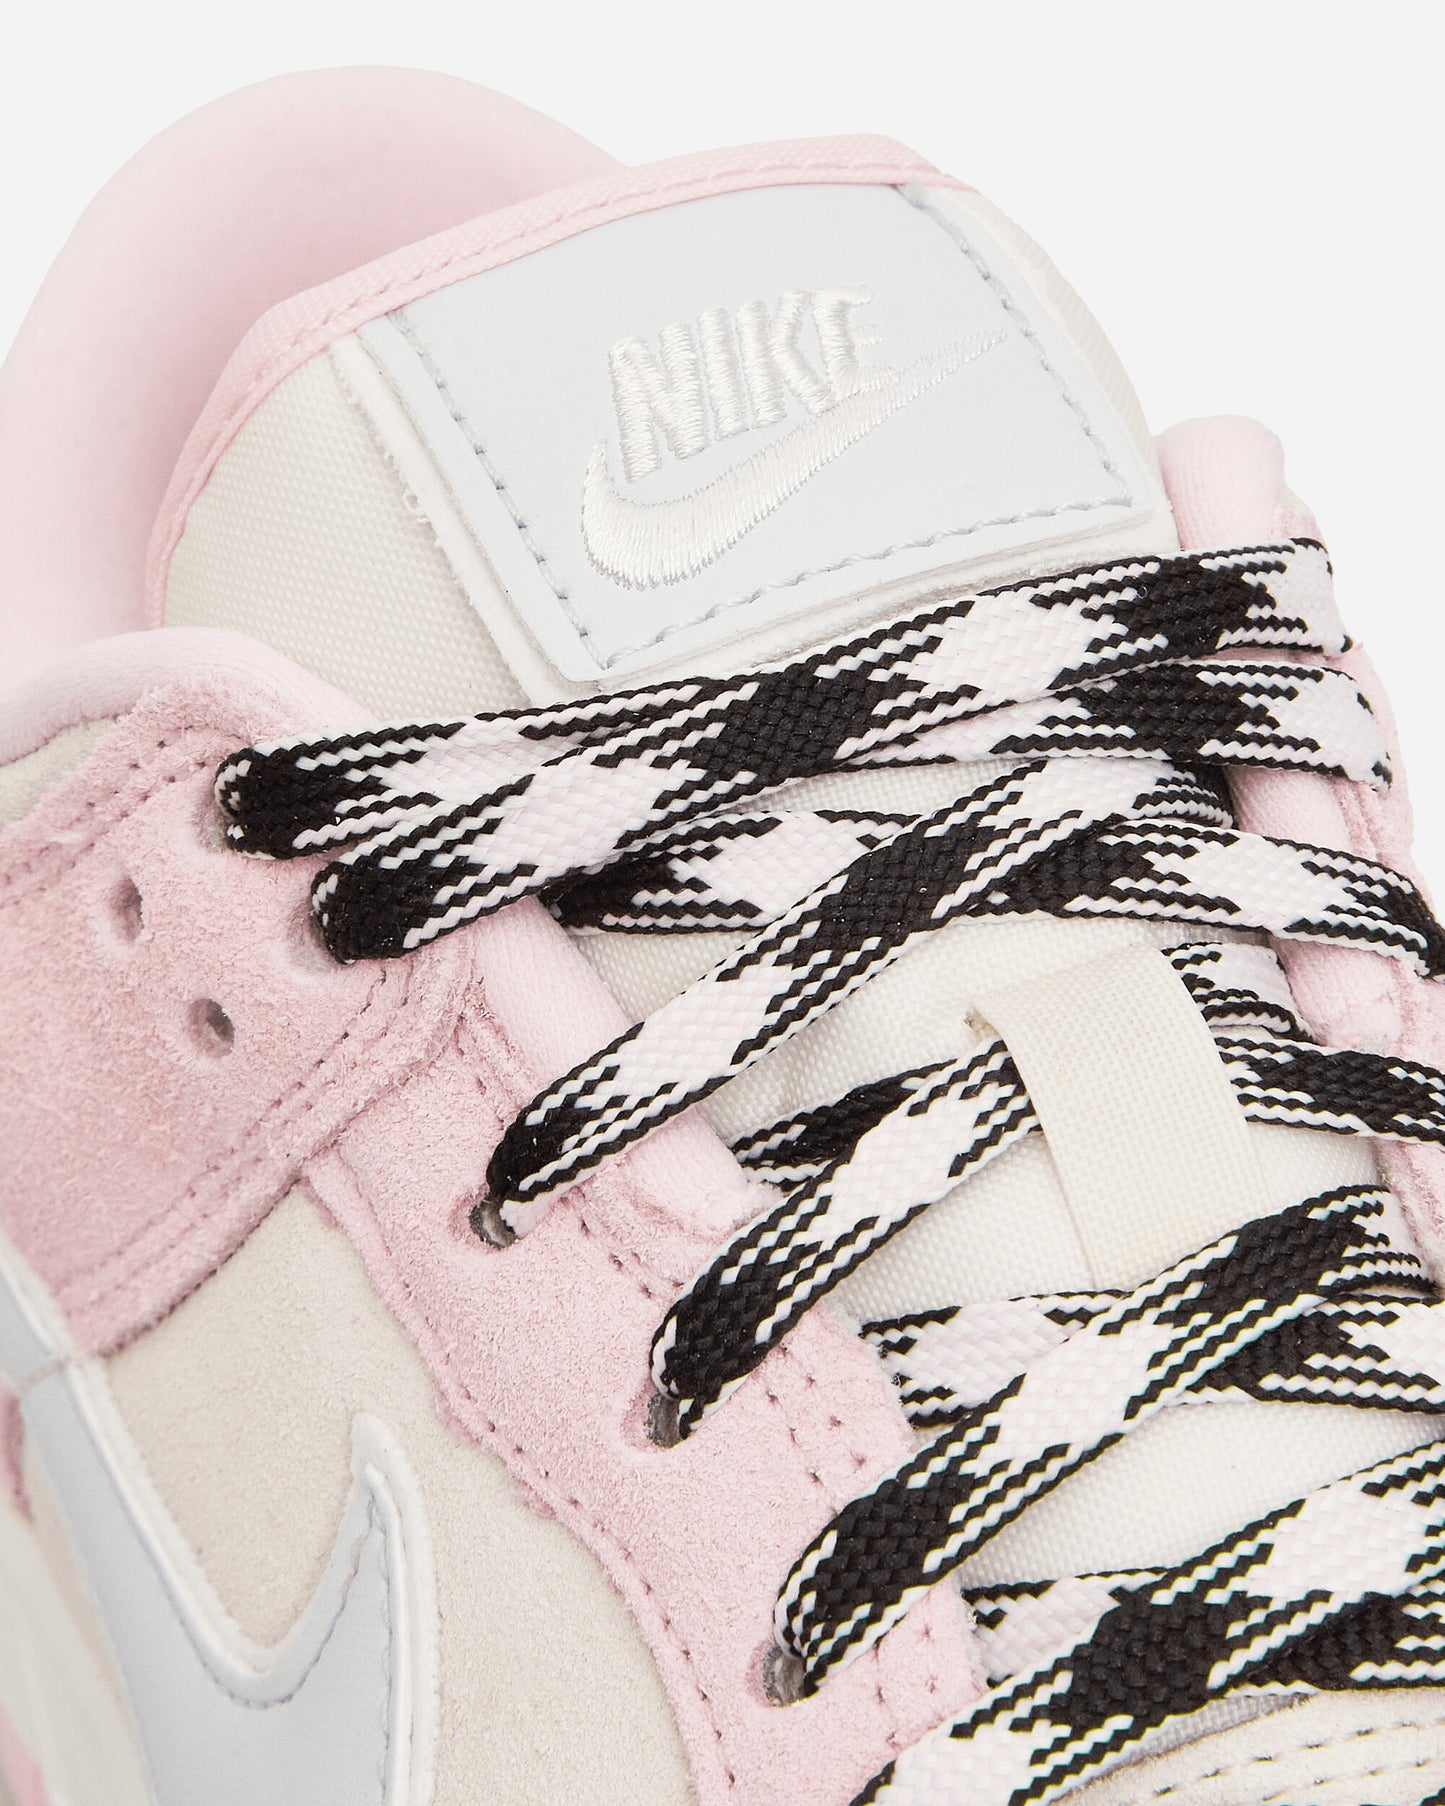 Nike Wmns Dunk Lolx Pink Foam /Pure Platinum Sneakers Low DV3054-600